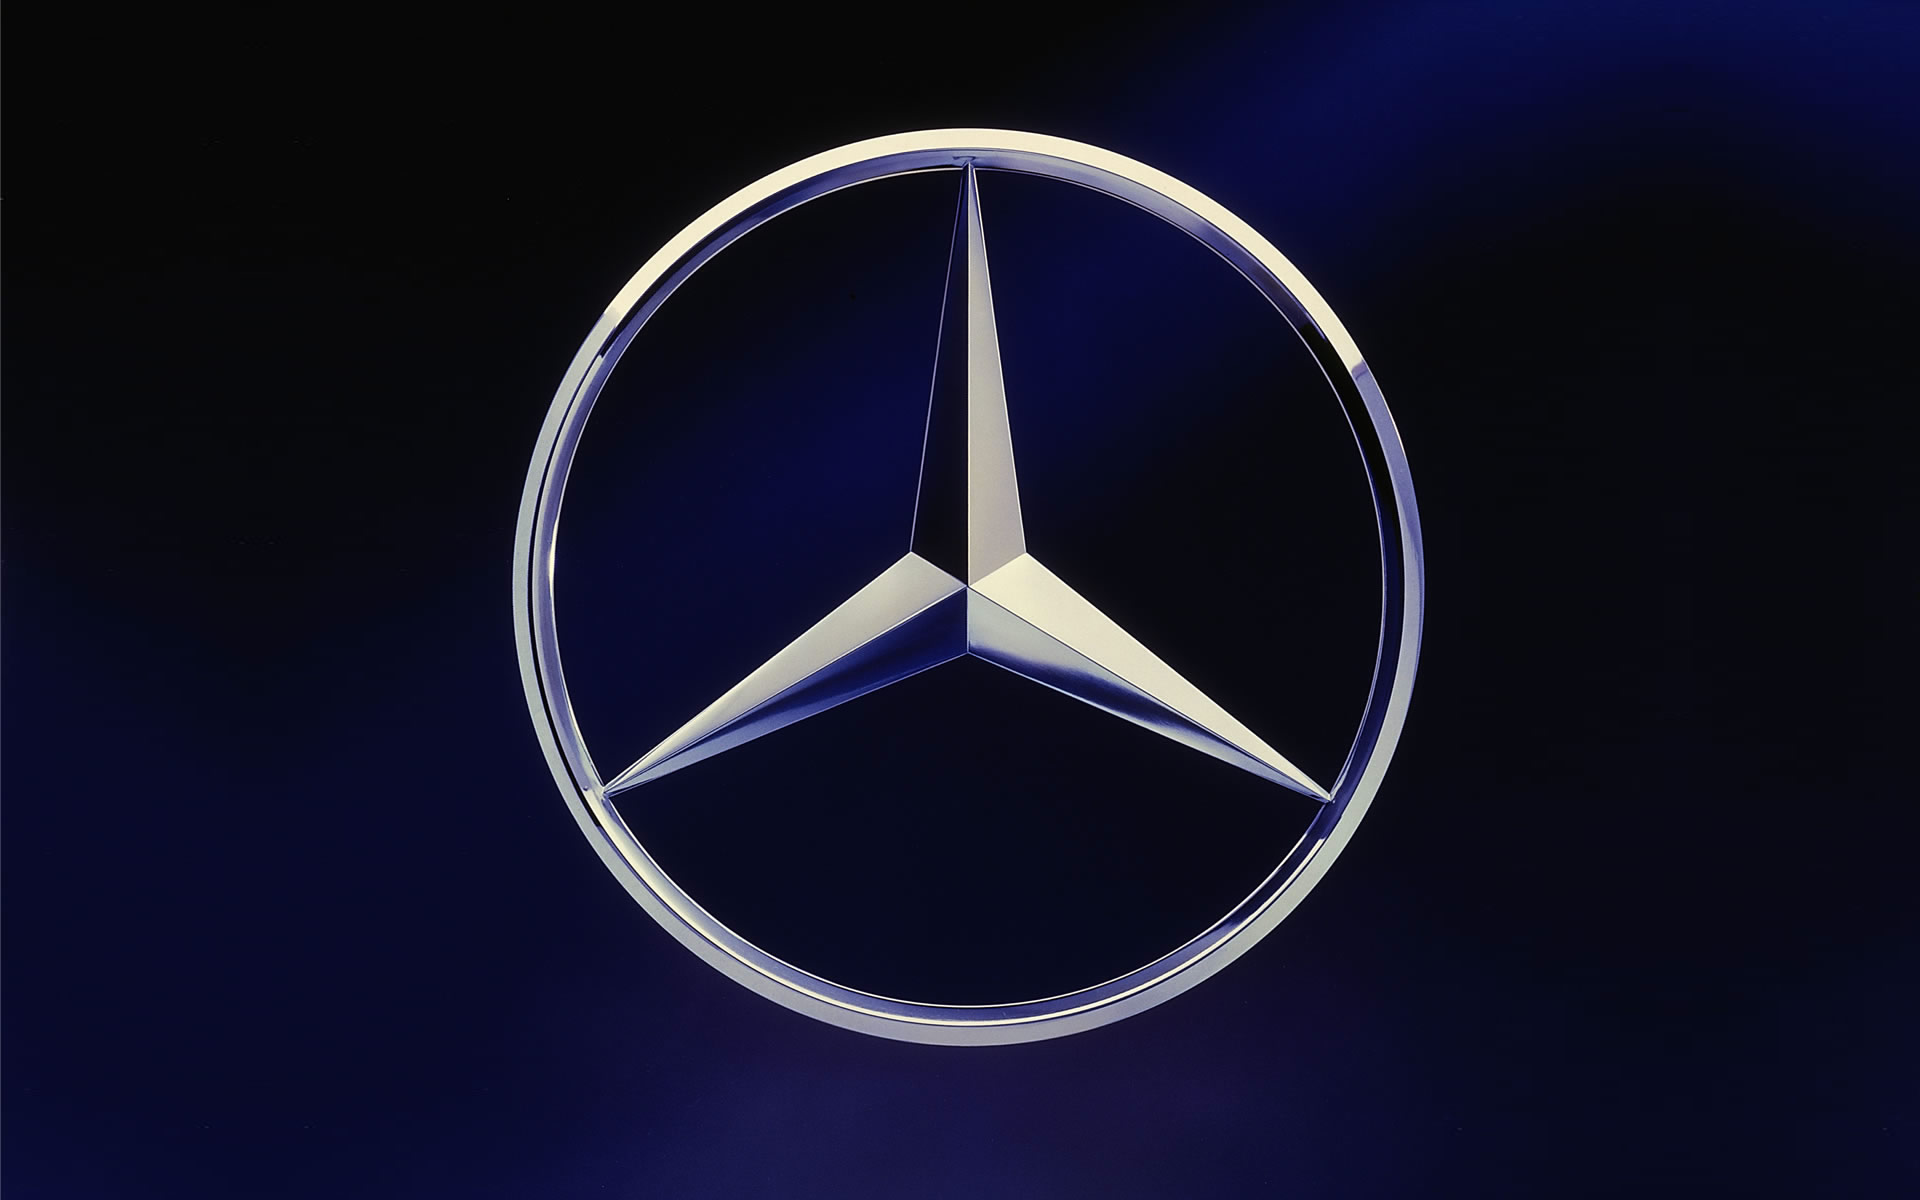 Mercedes-Benz - bateria - tecnologia